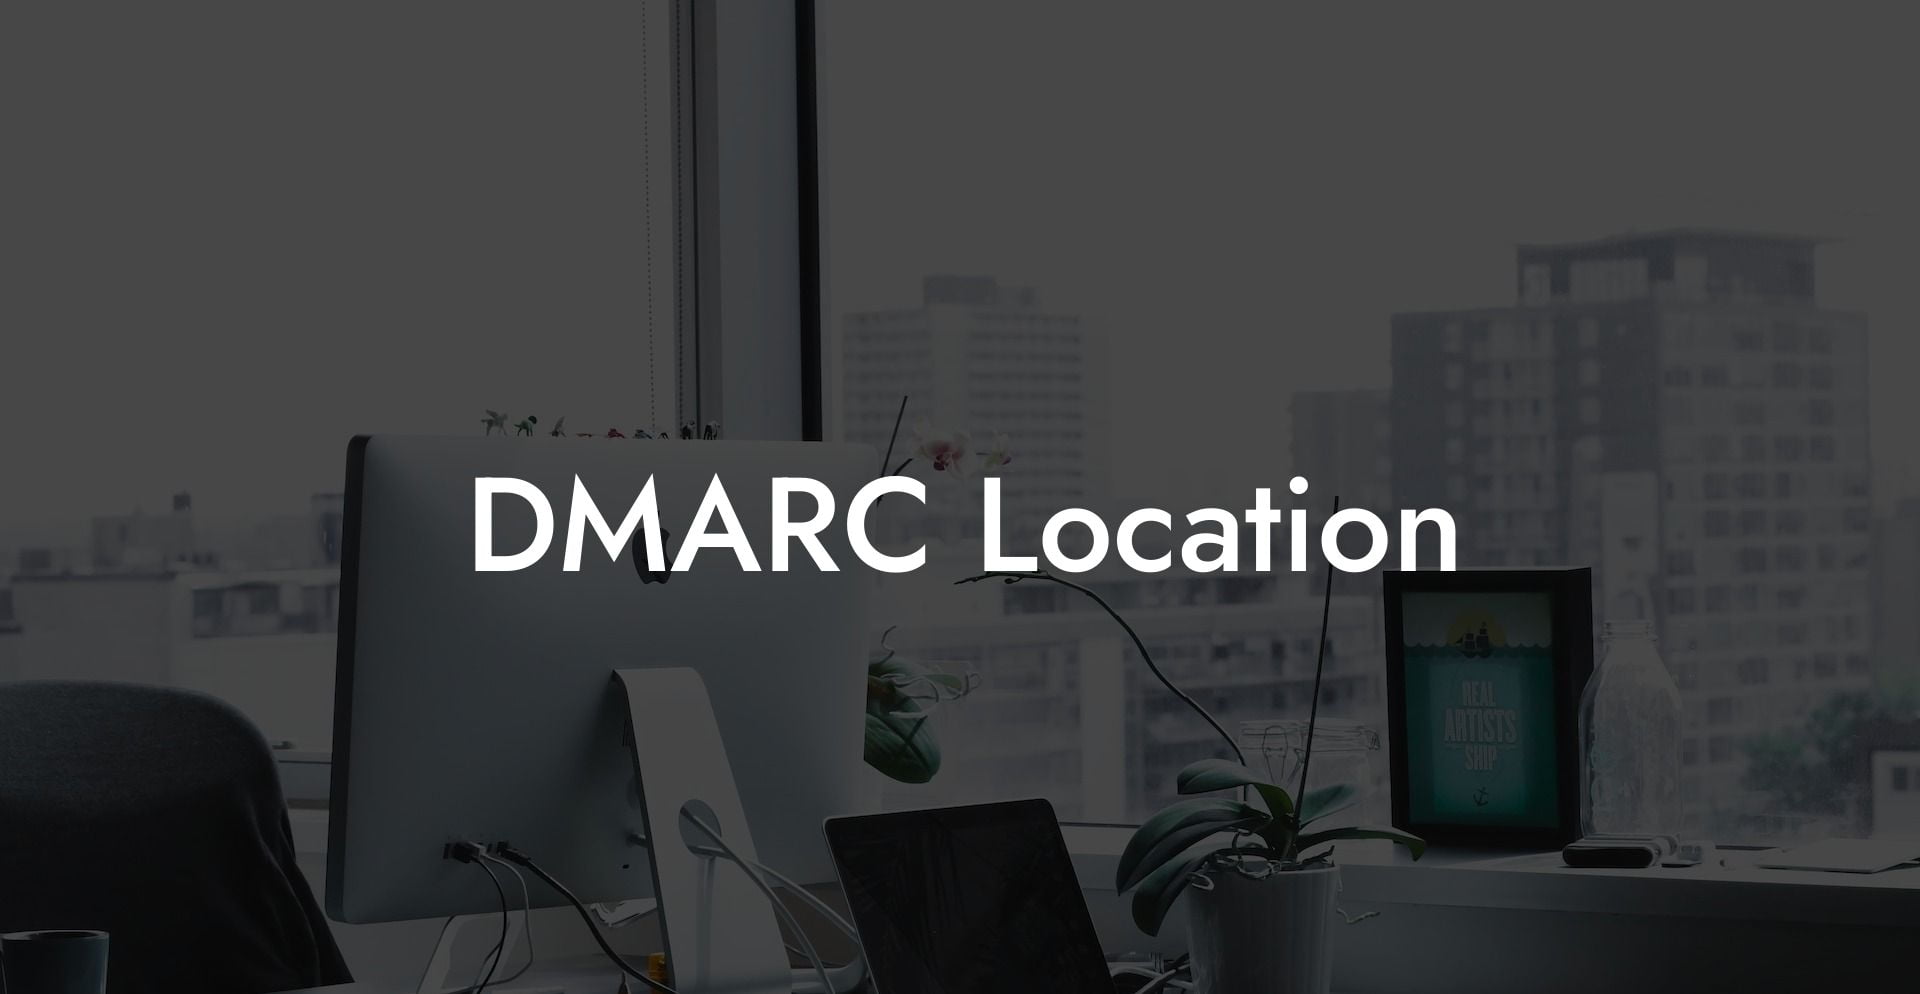 DMARC Location